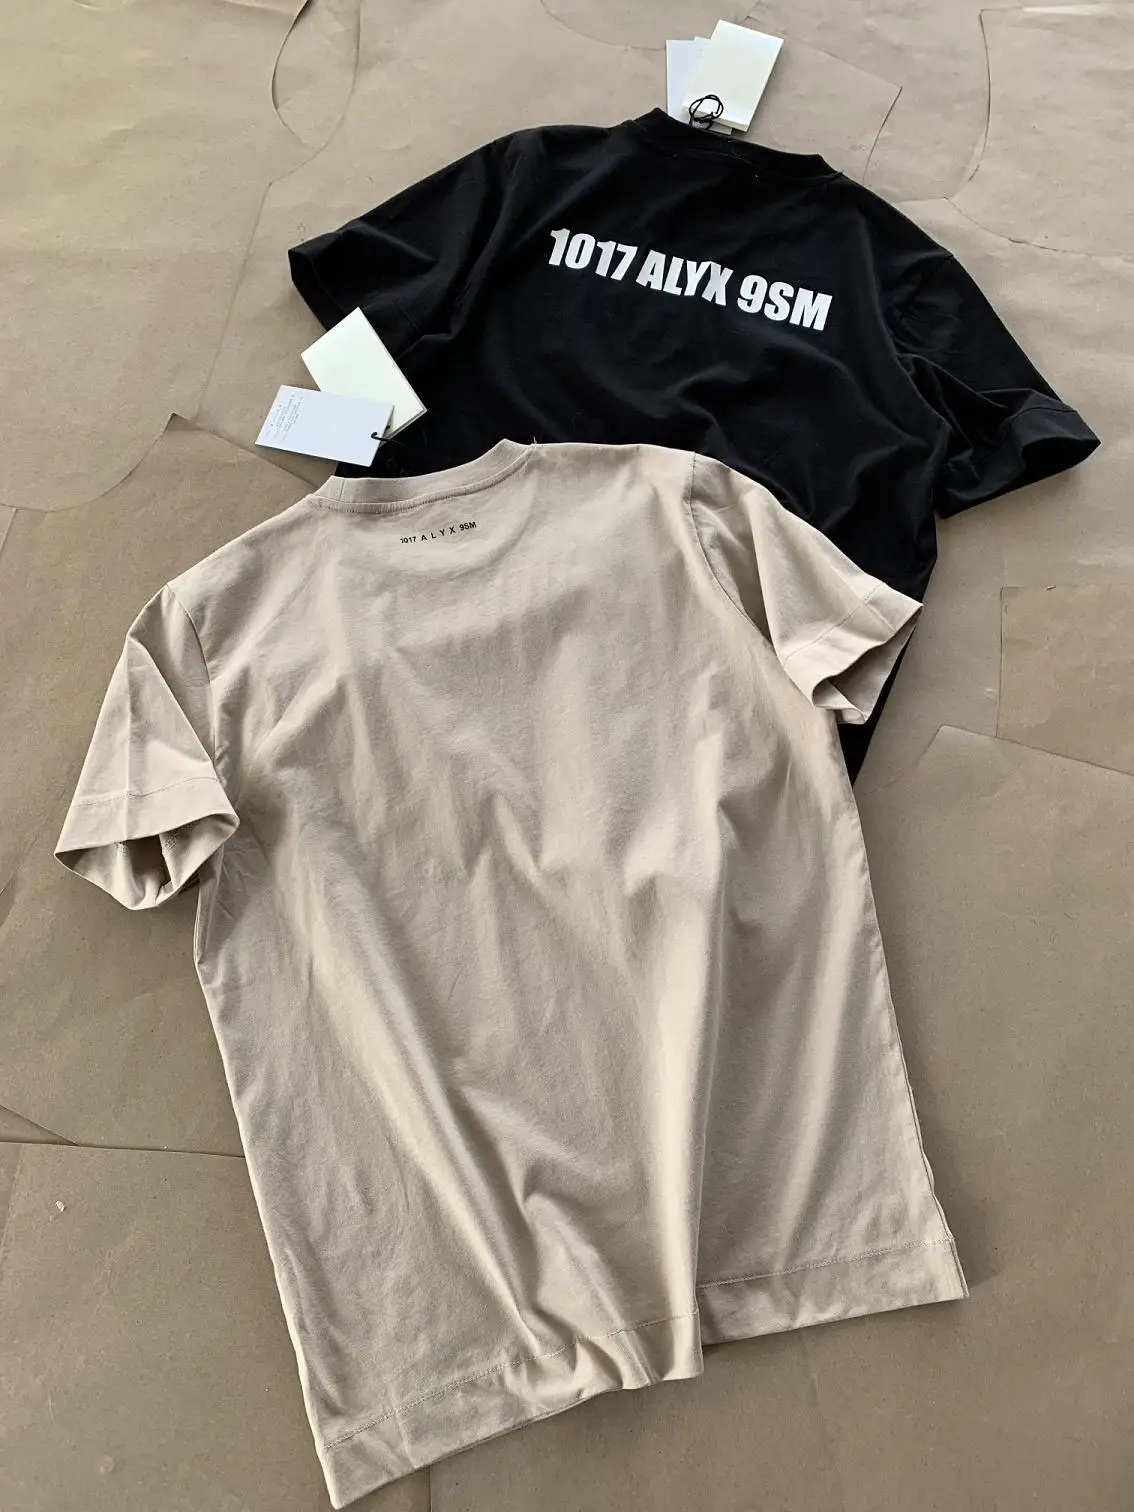 22SS High Quality 1017 ALYX 9SM Logo Print ALYX T Shirt Men Women EU Size  100% Cotton ALYX Top Tees